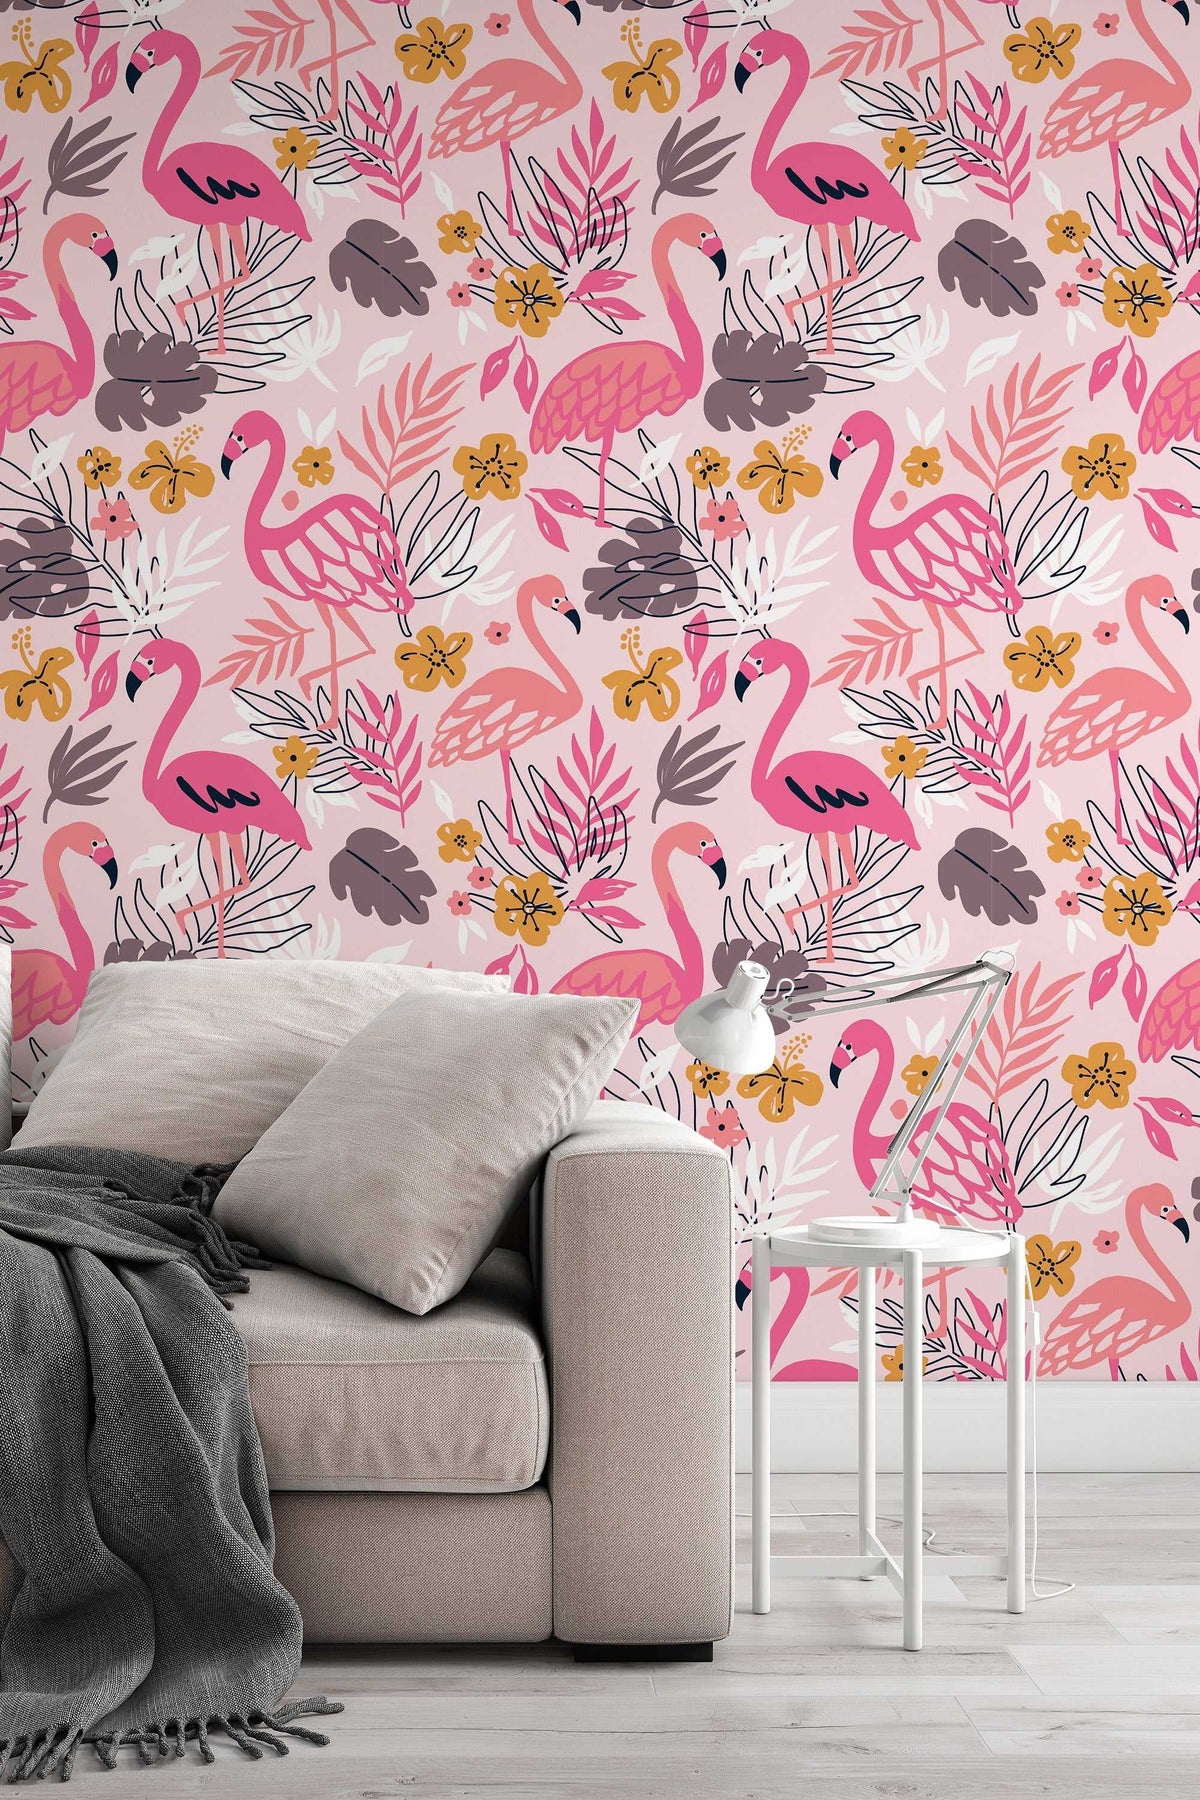 Watercolor Flamingos Wallpaper  Removable Wallpaper Peel and Stick  Wallpaper Wall Paper Wall Mural  B323  Flamingo wallpaper Wall wallpaper  Removable wallpaper